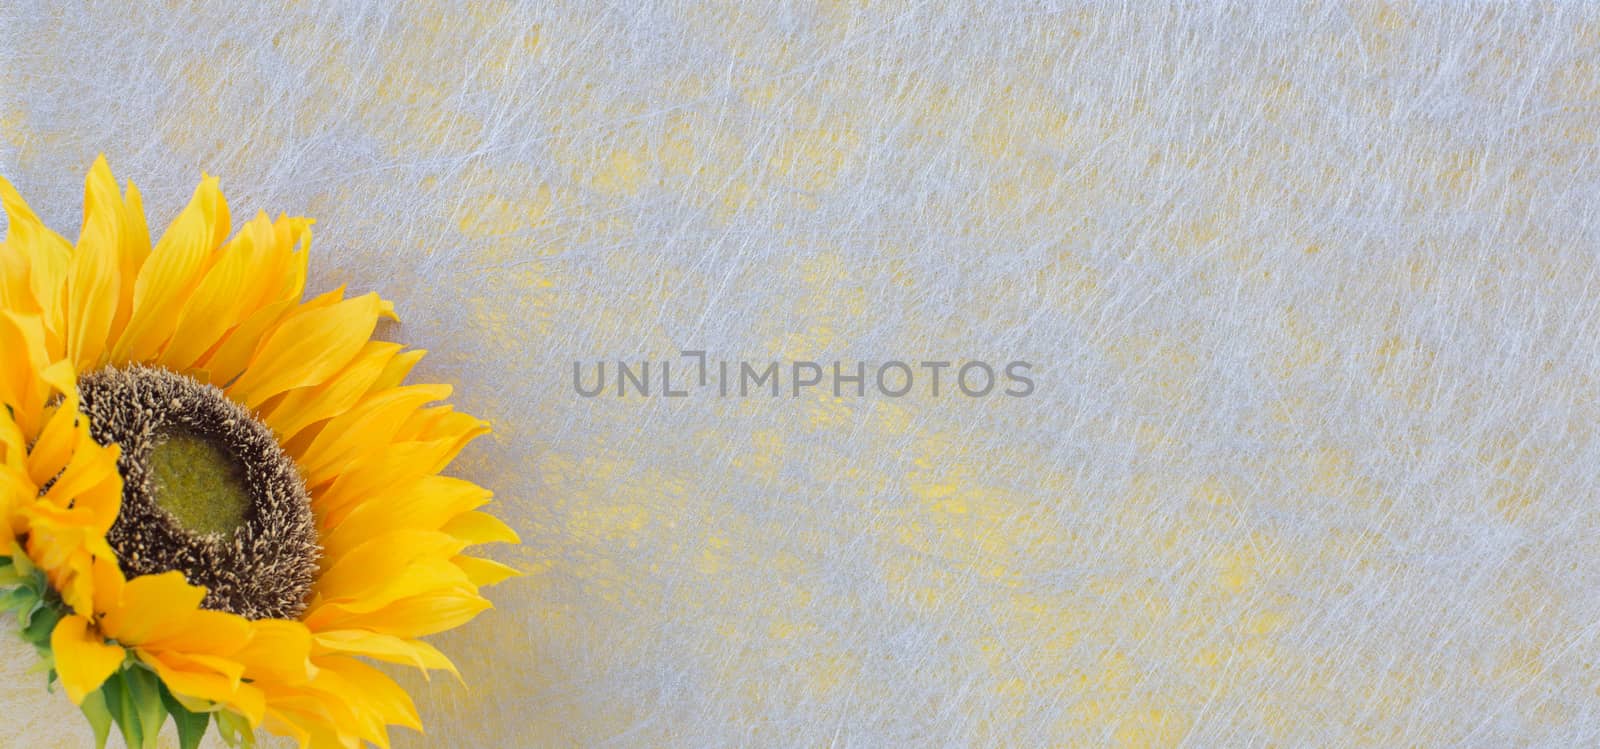 Sunflower, grey fiber fabric and yellow glitter film, background